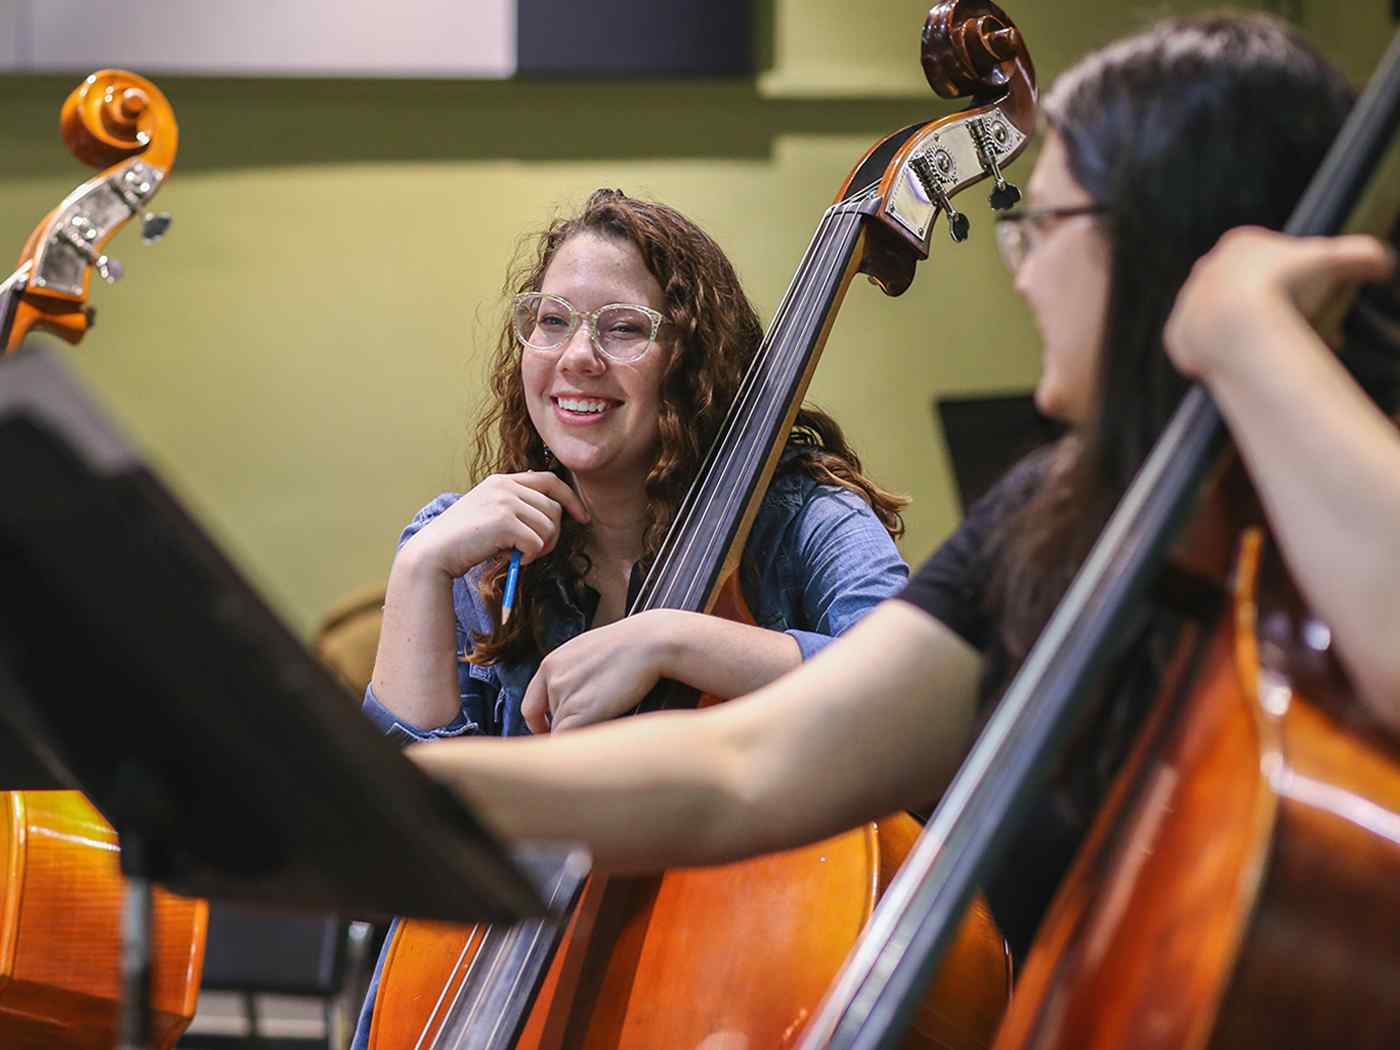 Female Symphony student smiling.